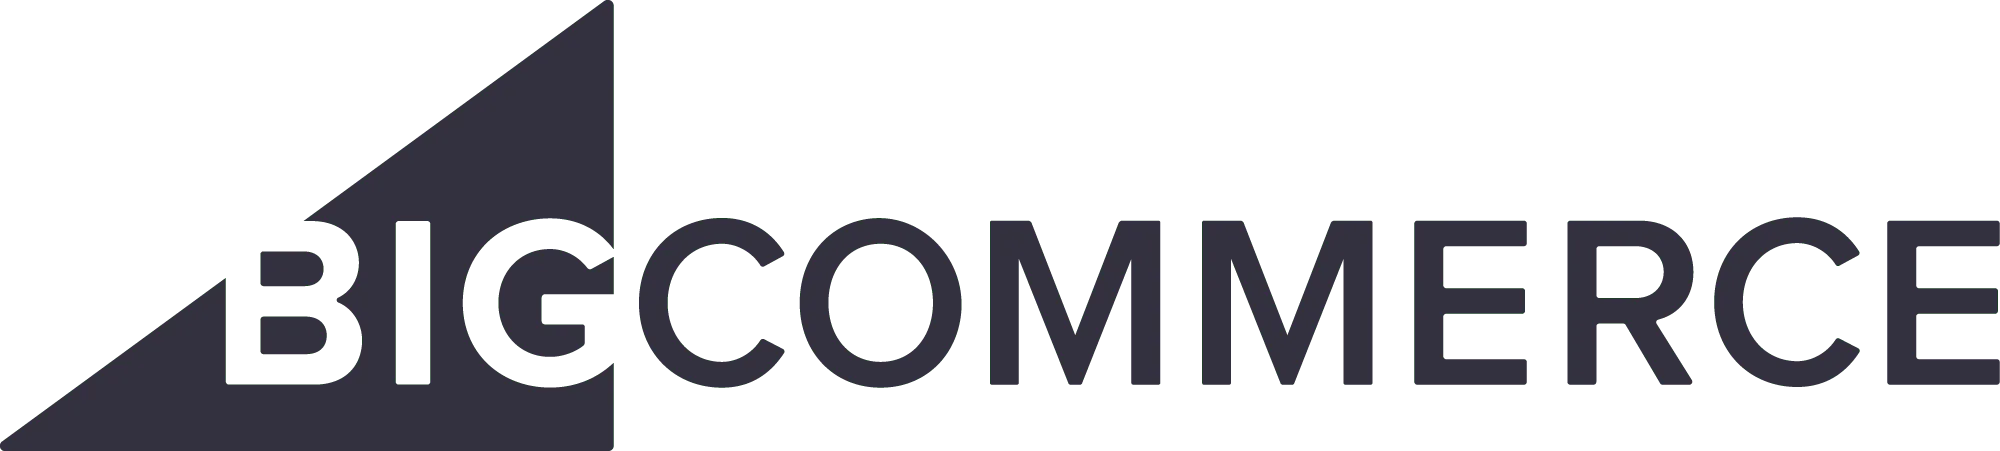 Big Commerce logo dark mtime20190713174103